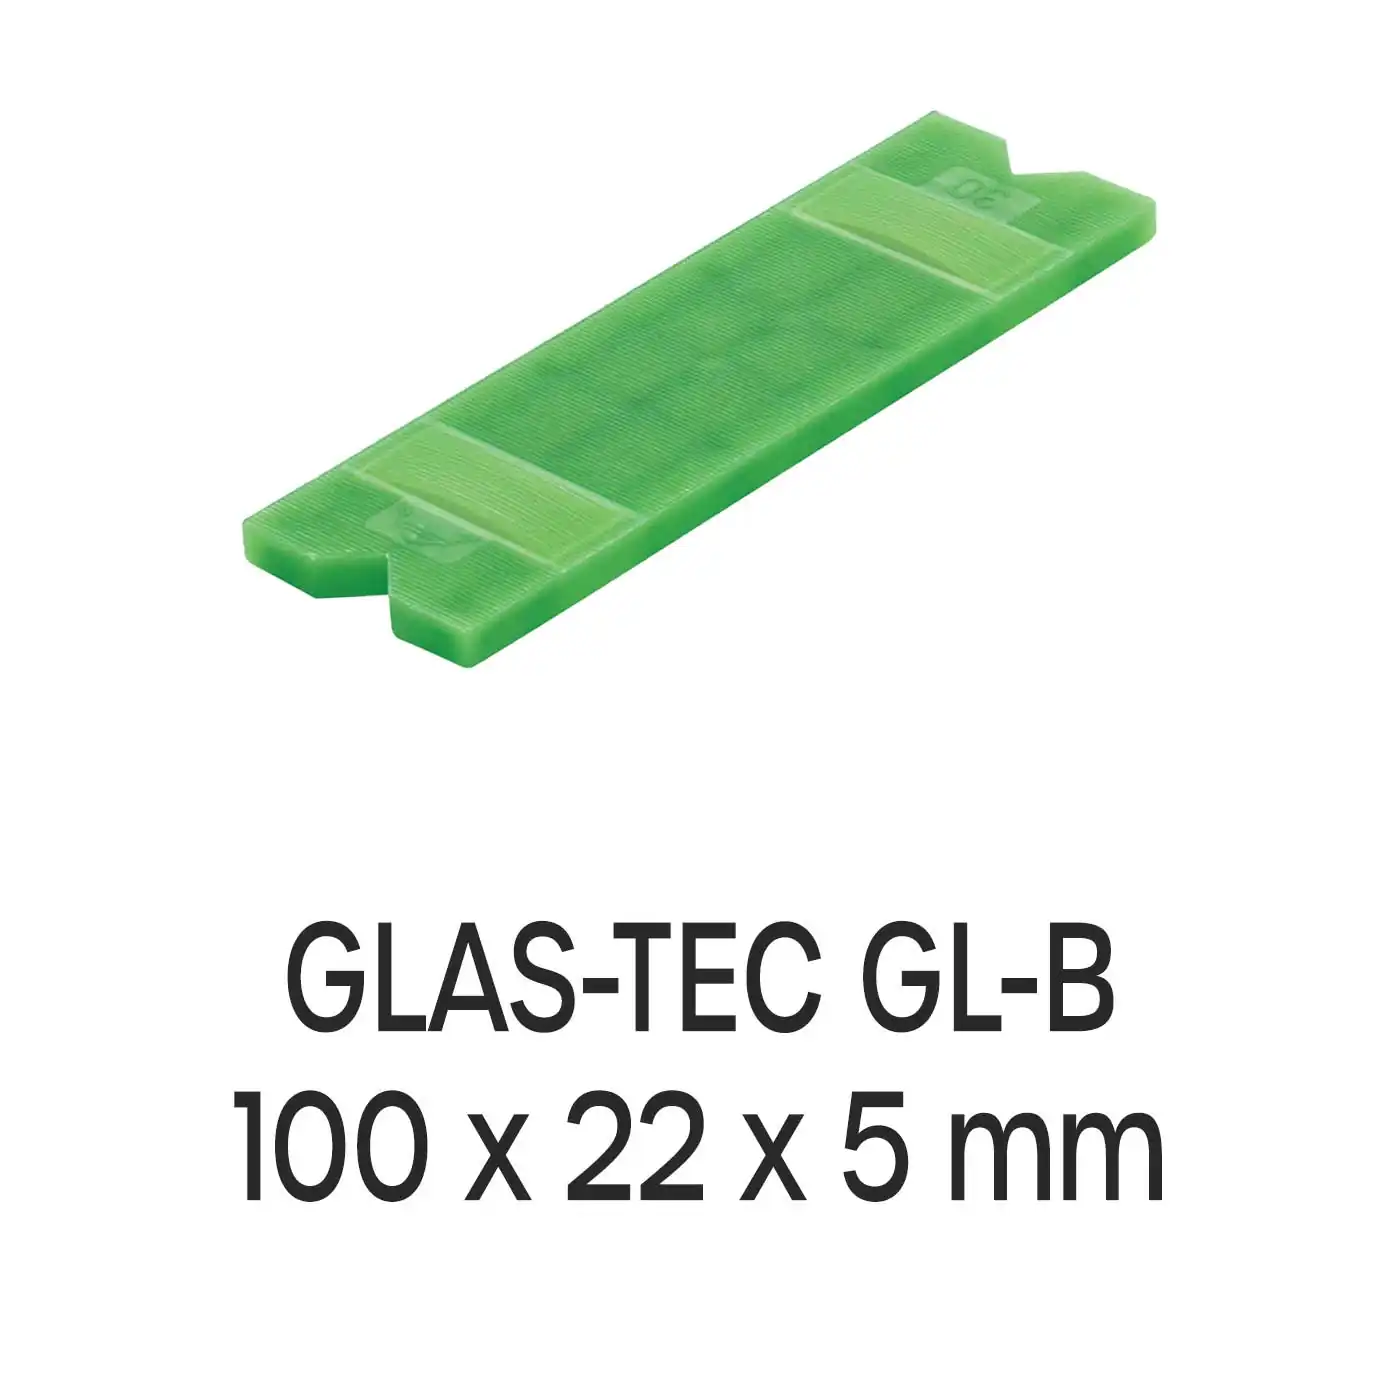 Roto GLAS-TEC GL-B 100 x 22 x 5 mm Verglasungsklötze 1000 Stück